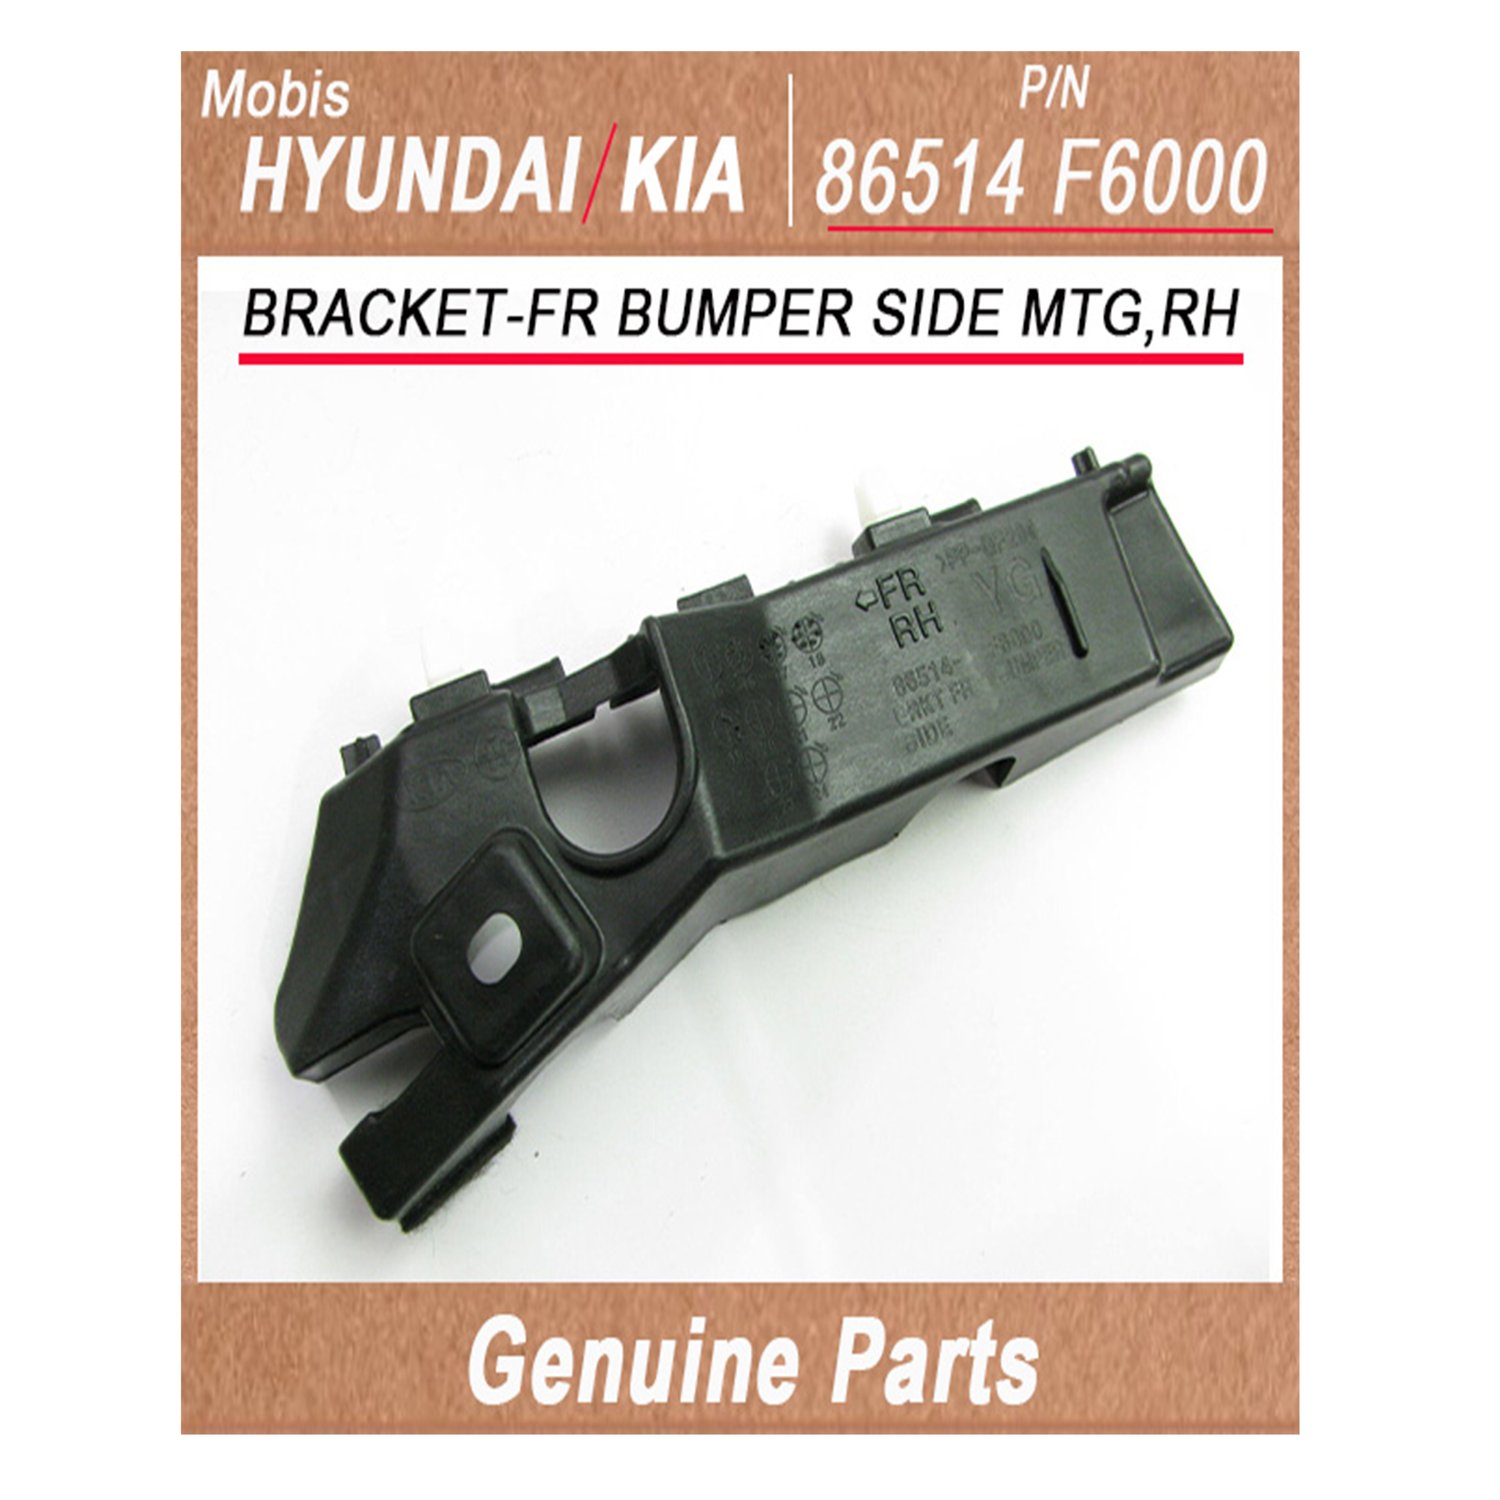 86514F6000 _ BRACKET_FR BUMPER SIDE MTG_RH _ Genuine Korean Automotive Spare Parts _ Hyundai Kia _Mo